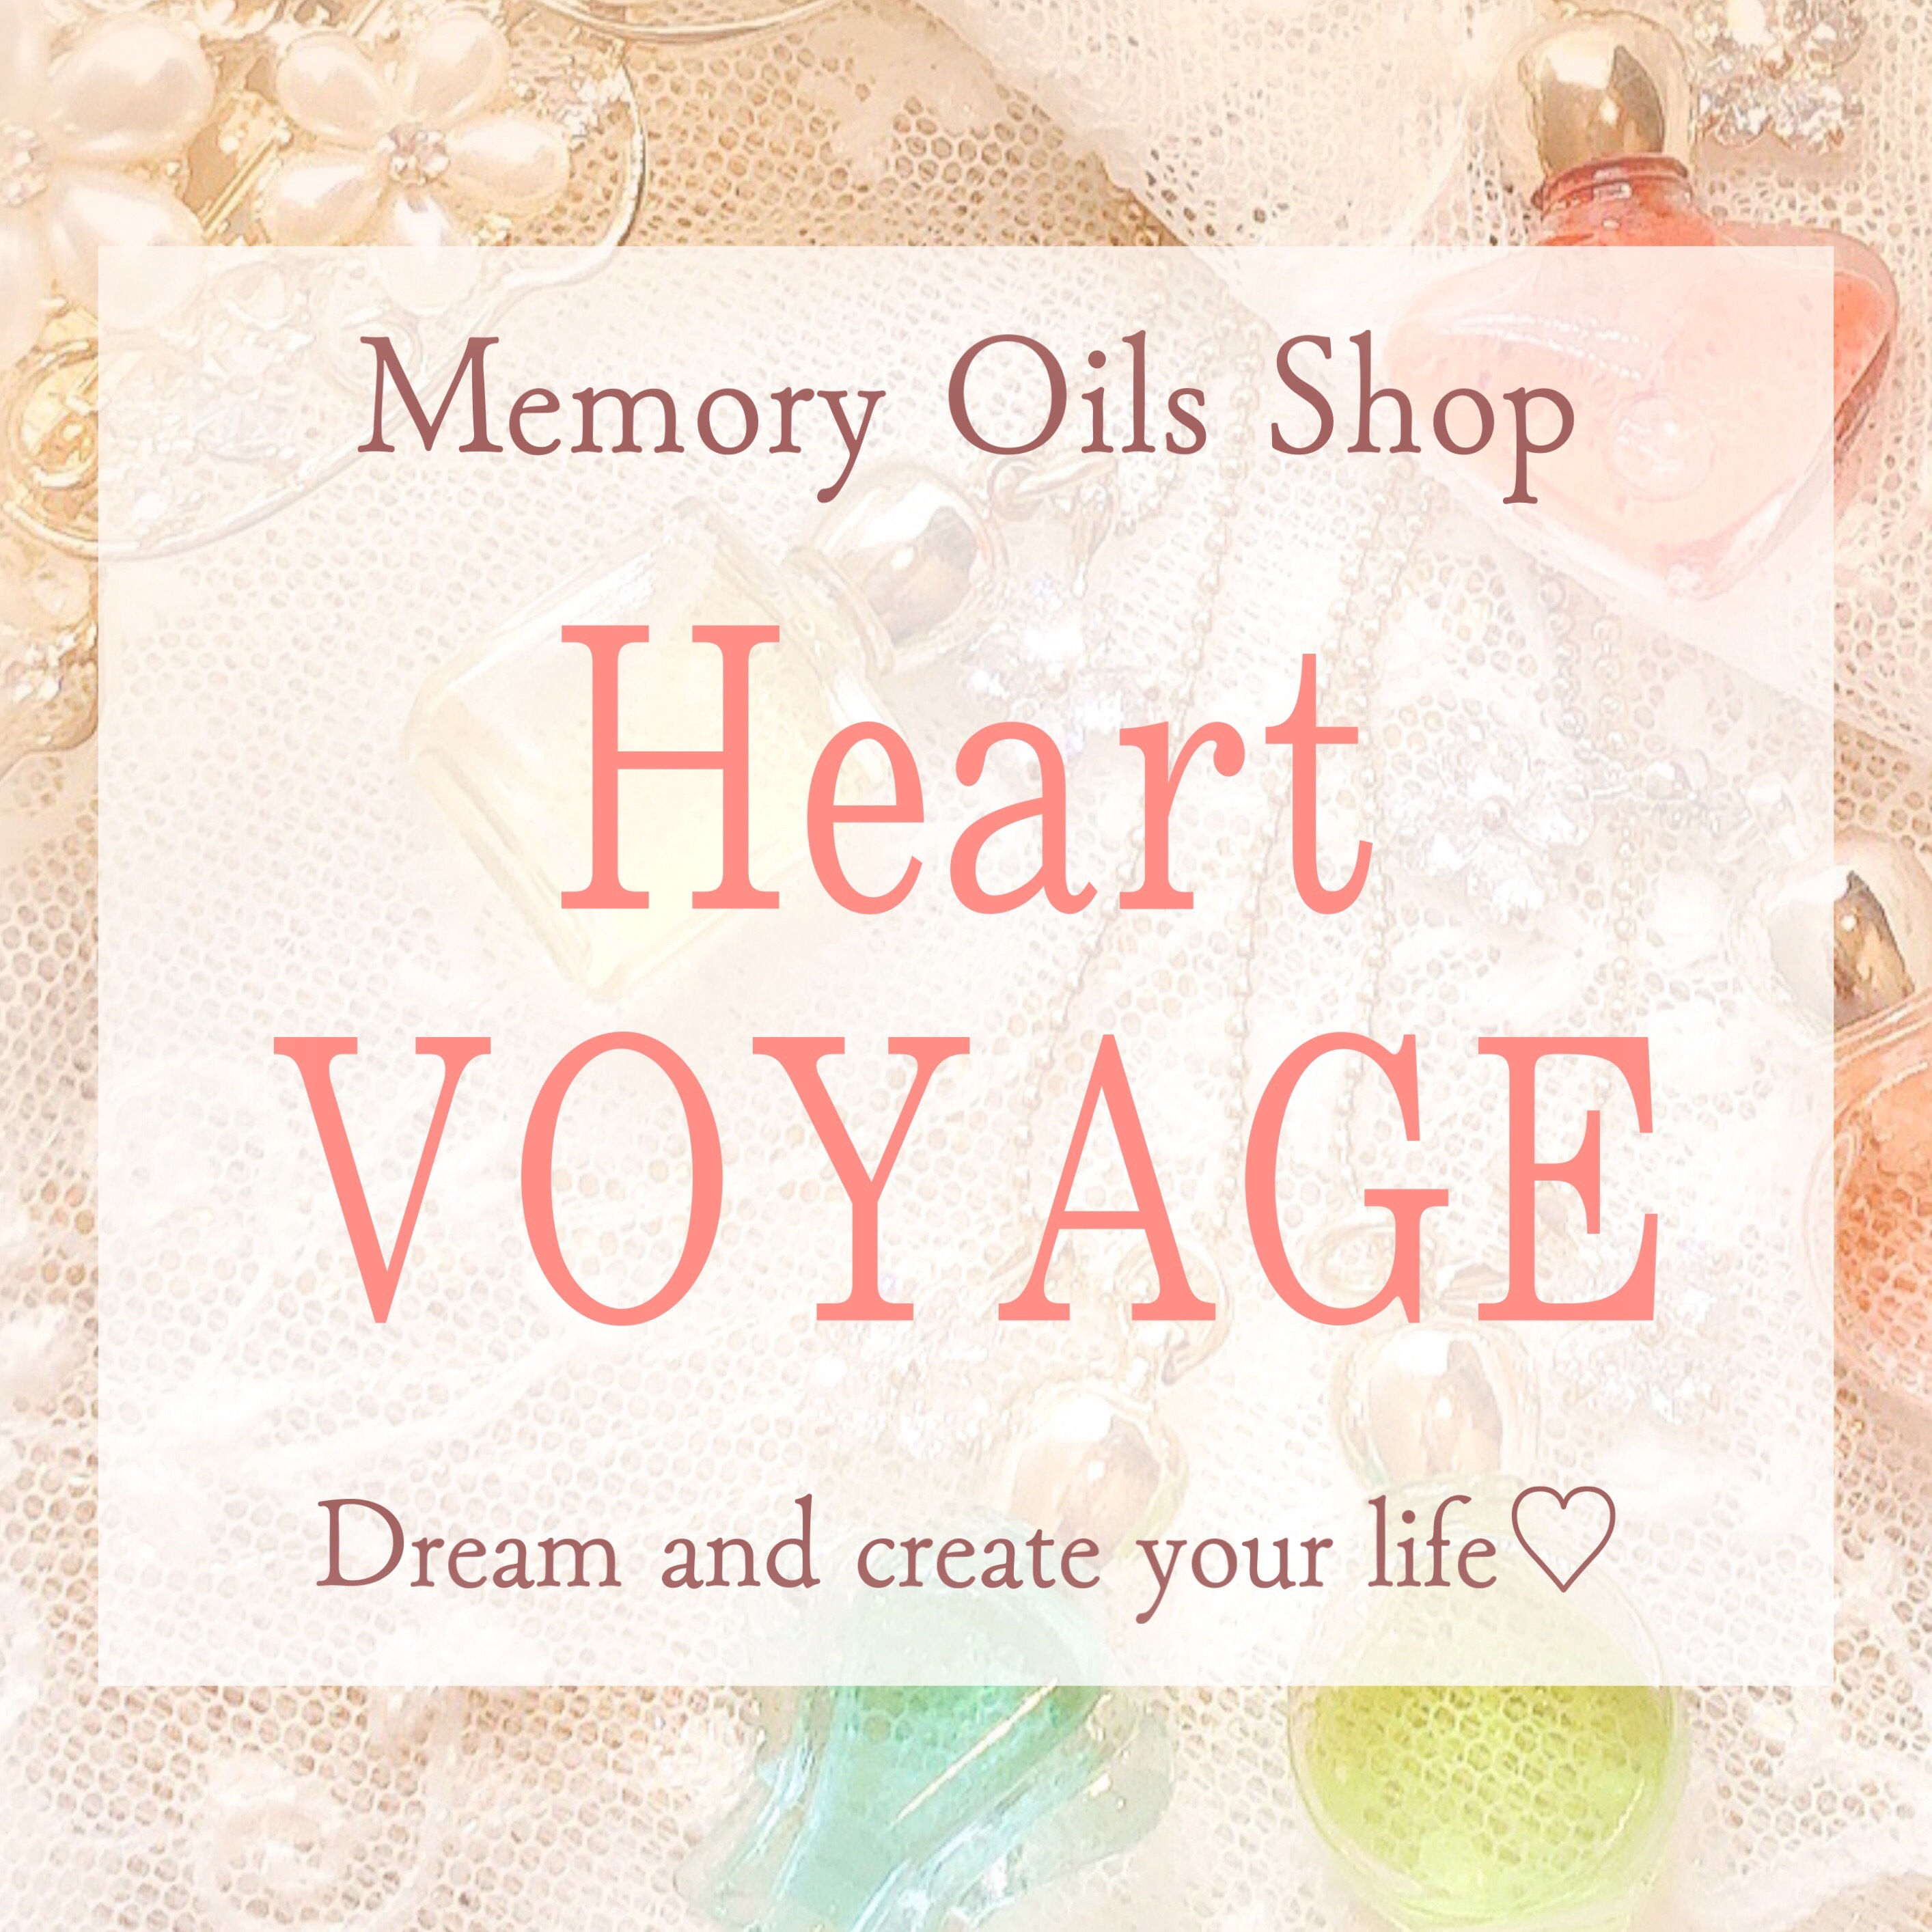 Heart Voyage 人生を動かすメモリーオイルショップ